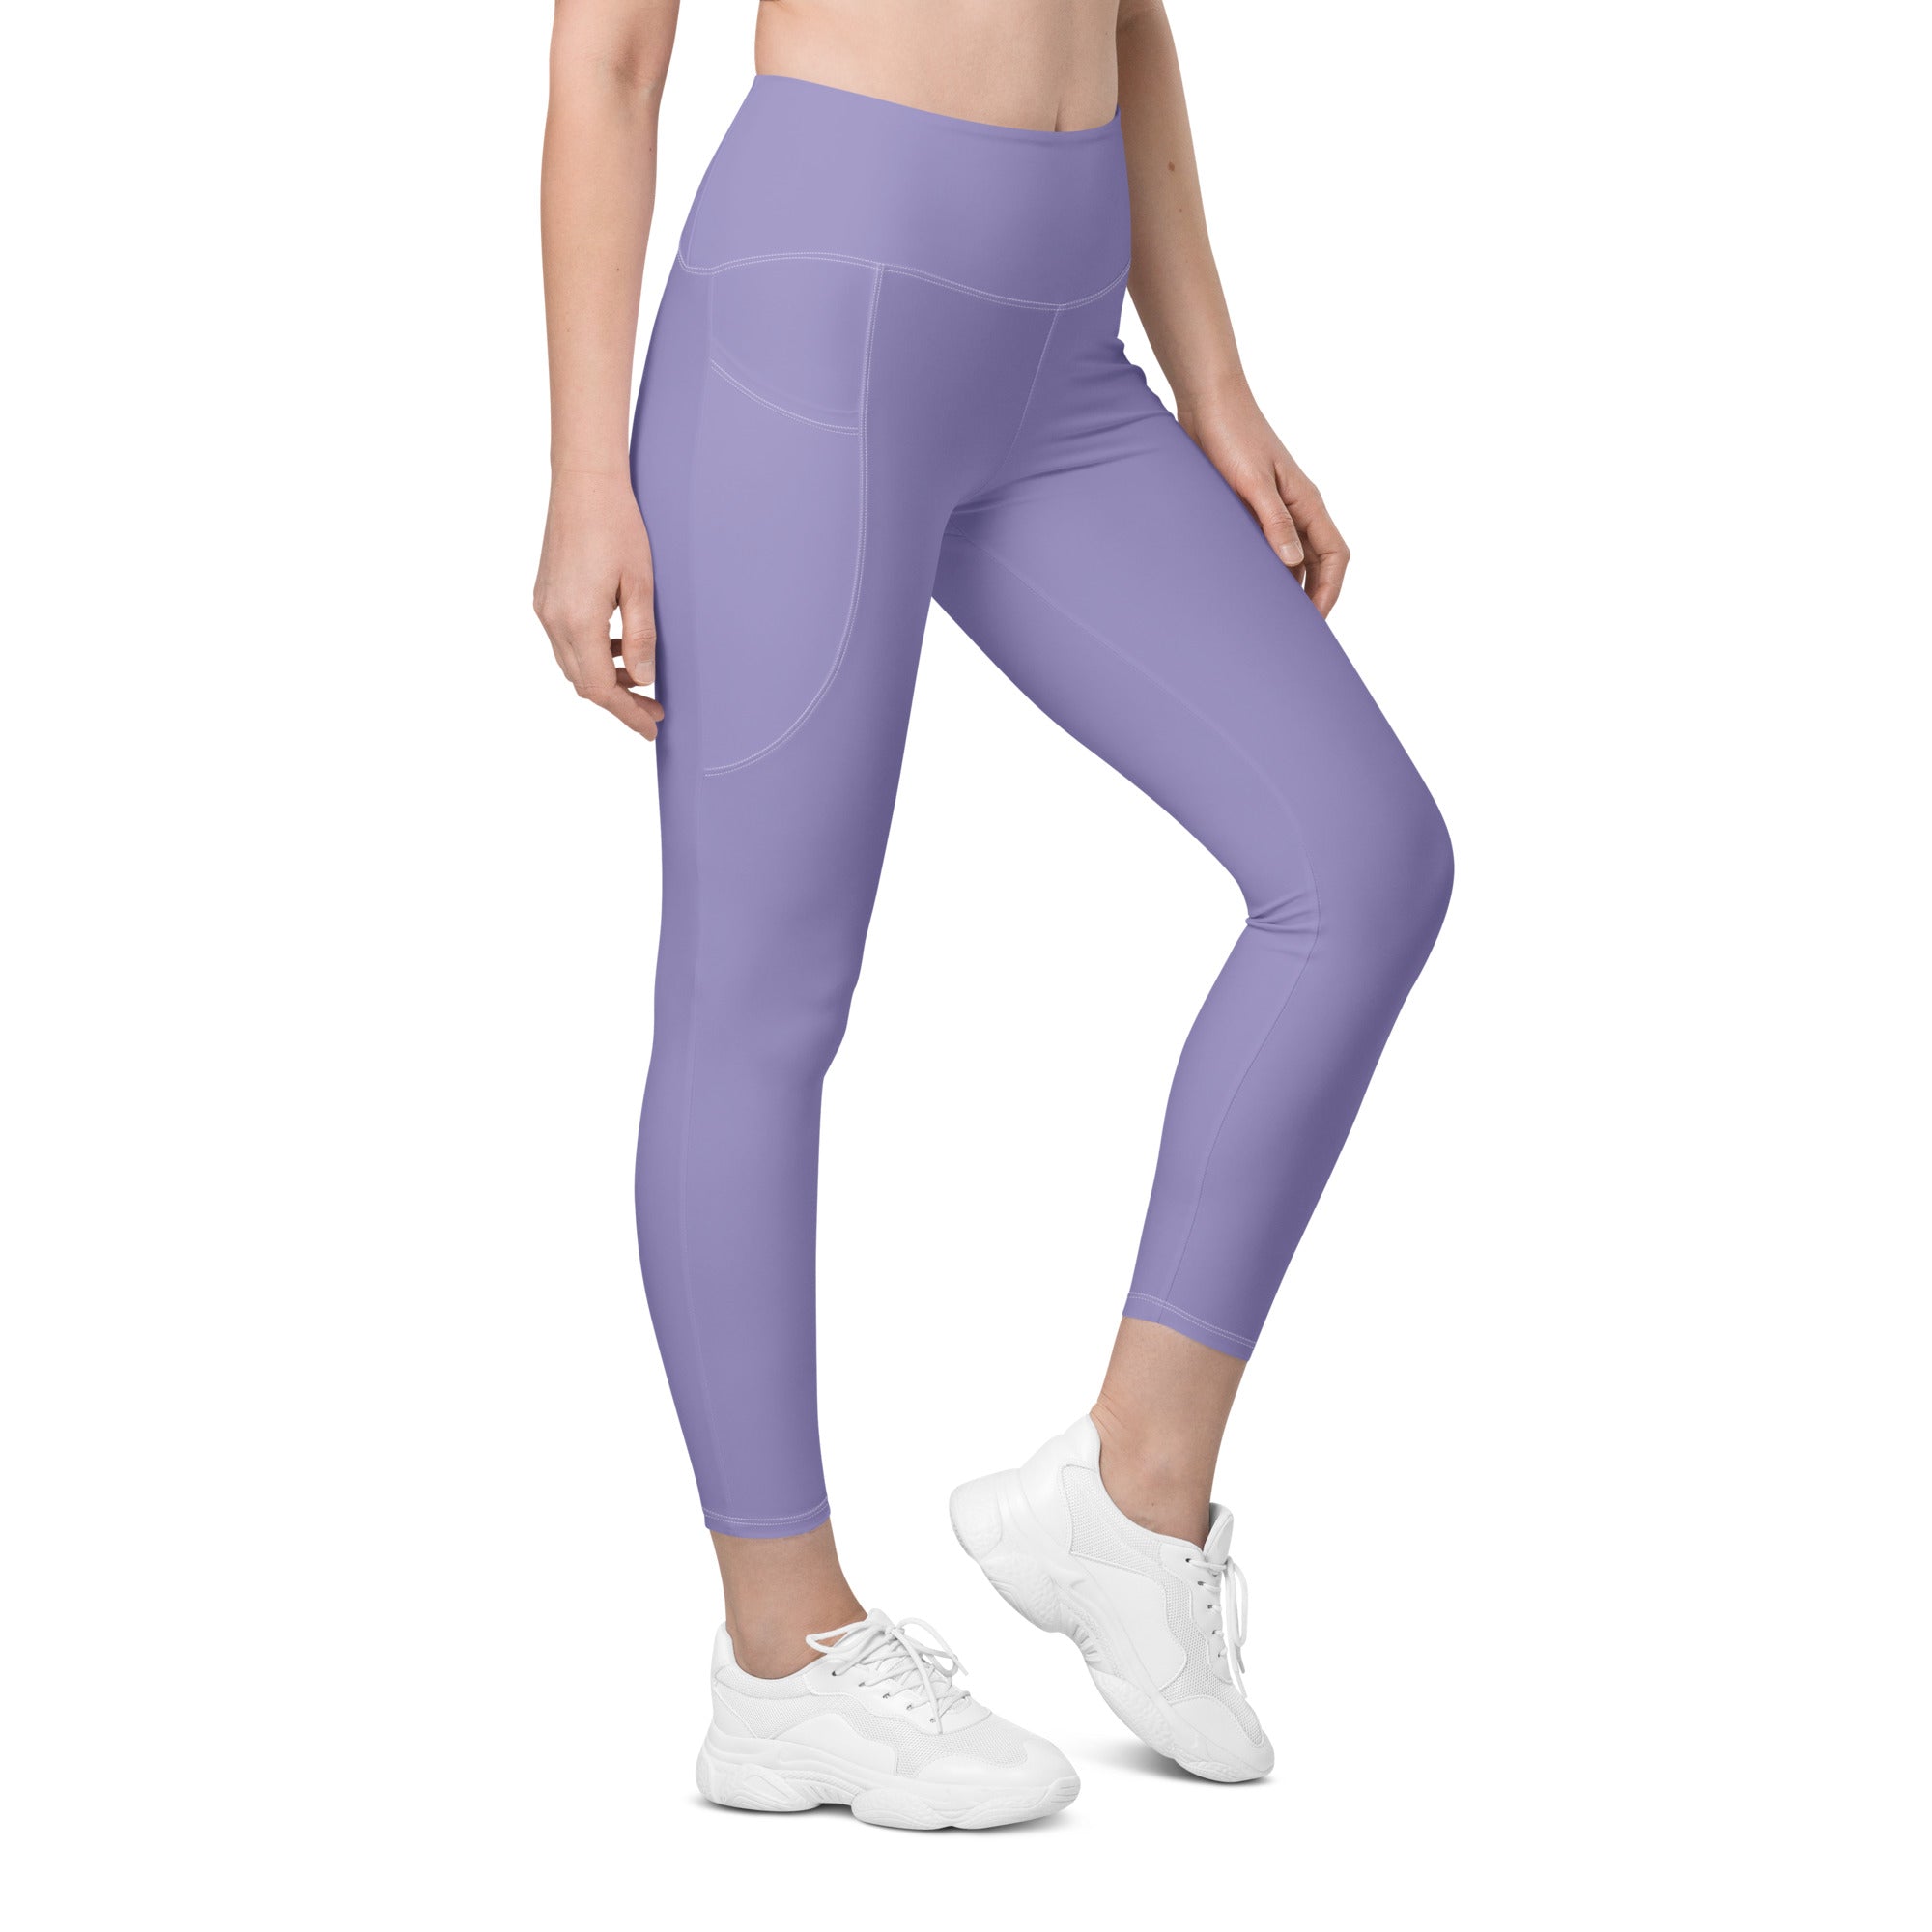 Lavender Purple Leggings With Pockets